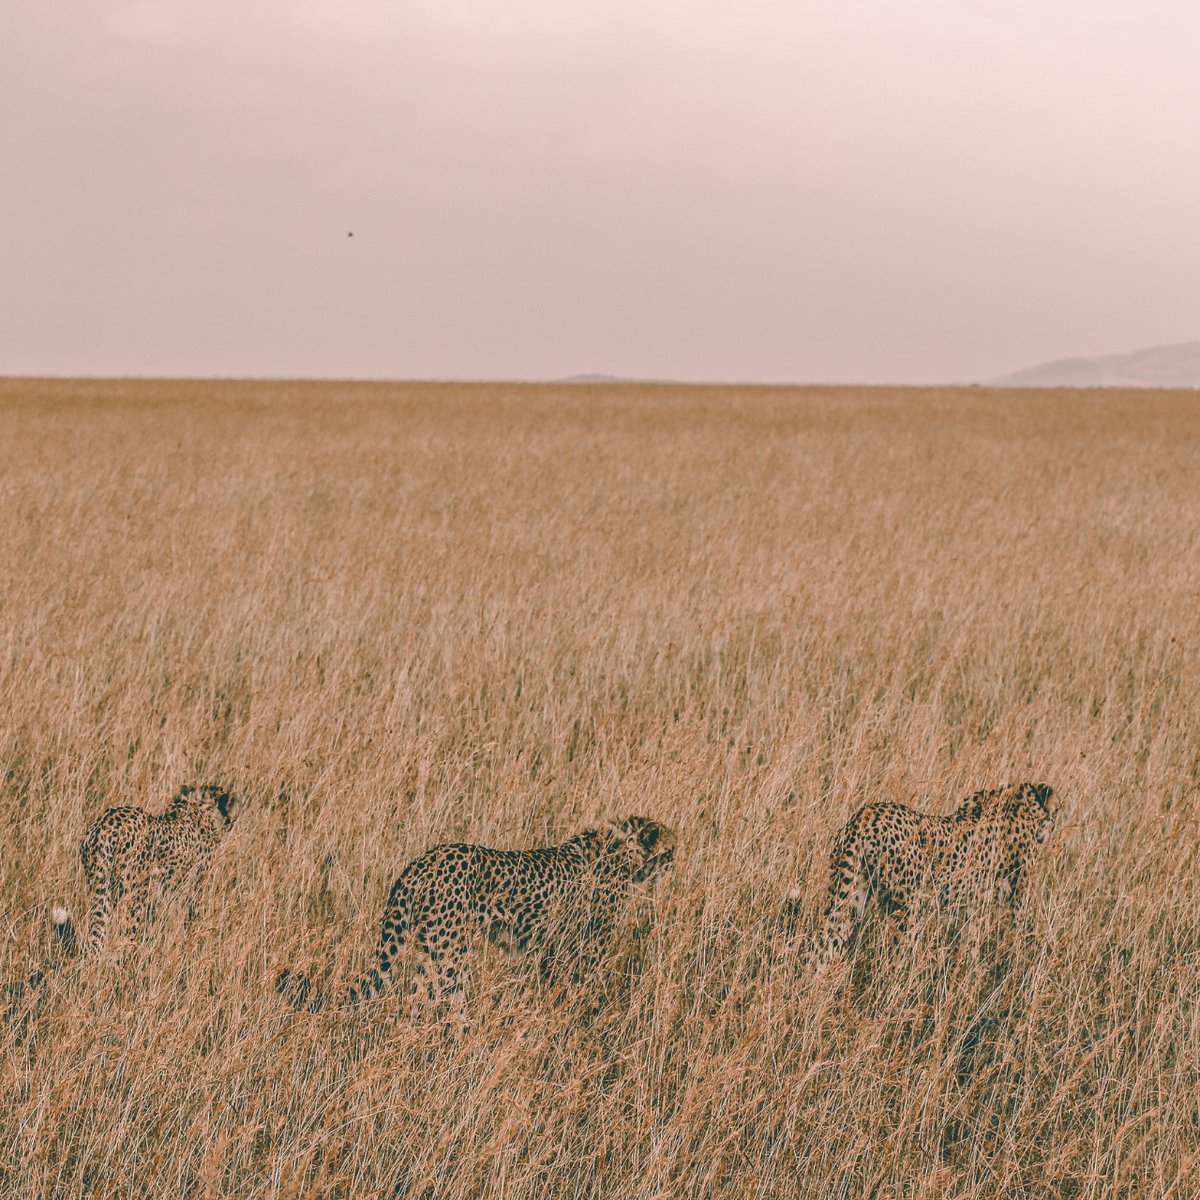 #Cheetah #brothers #hunting in #Savannah, Kenya
.
.
.
#MasaiMara
#CheetahBrothers
#KenyaWildlife
#KenyaCheetahs
#AfricanBigCat
#AfricanCheetah
#AfricanCarnivore
#KenyaCarnivore

#AfricanSafari
#Savannah
#Wildlife

#NatureHabitat #WildlifePhotography #AnimalThen #AnimalEnglish